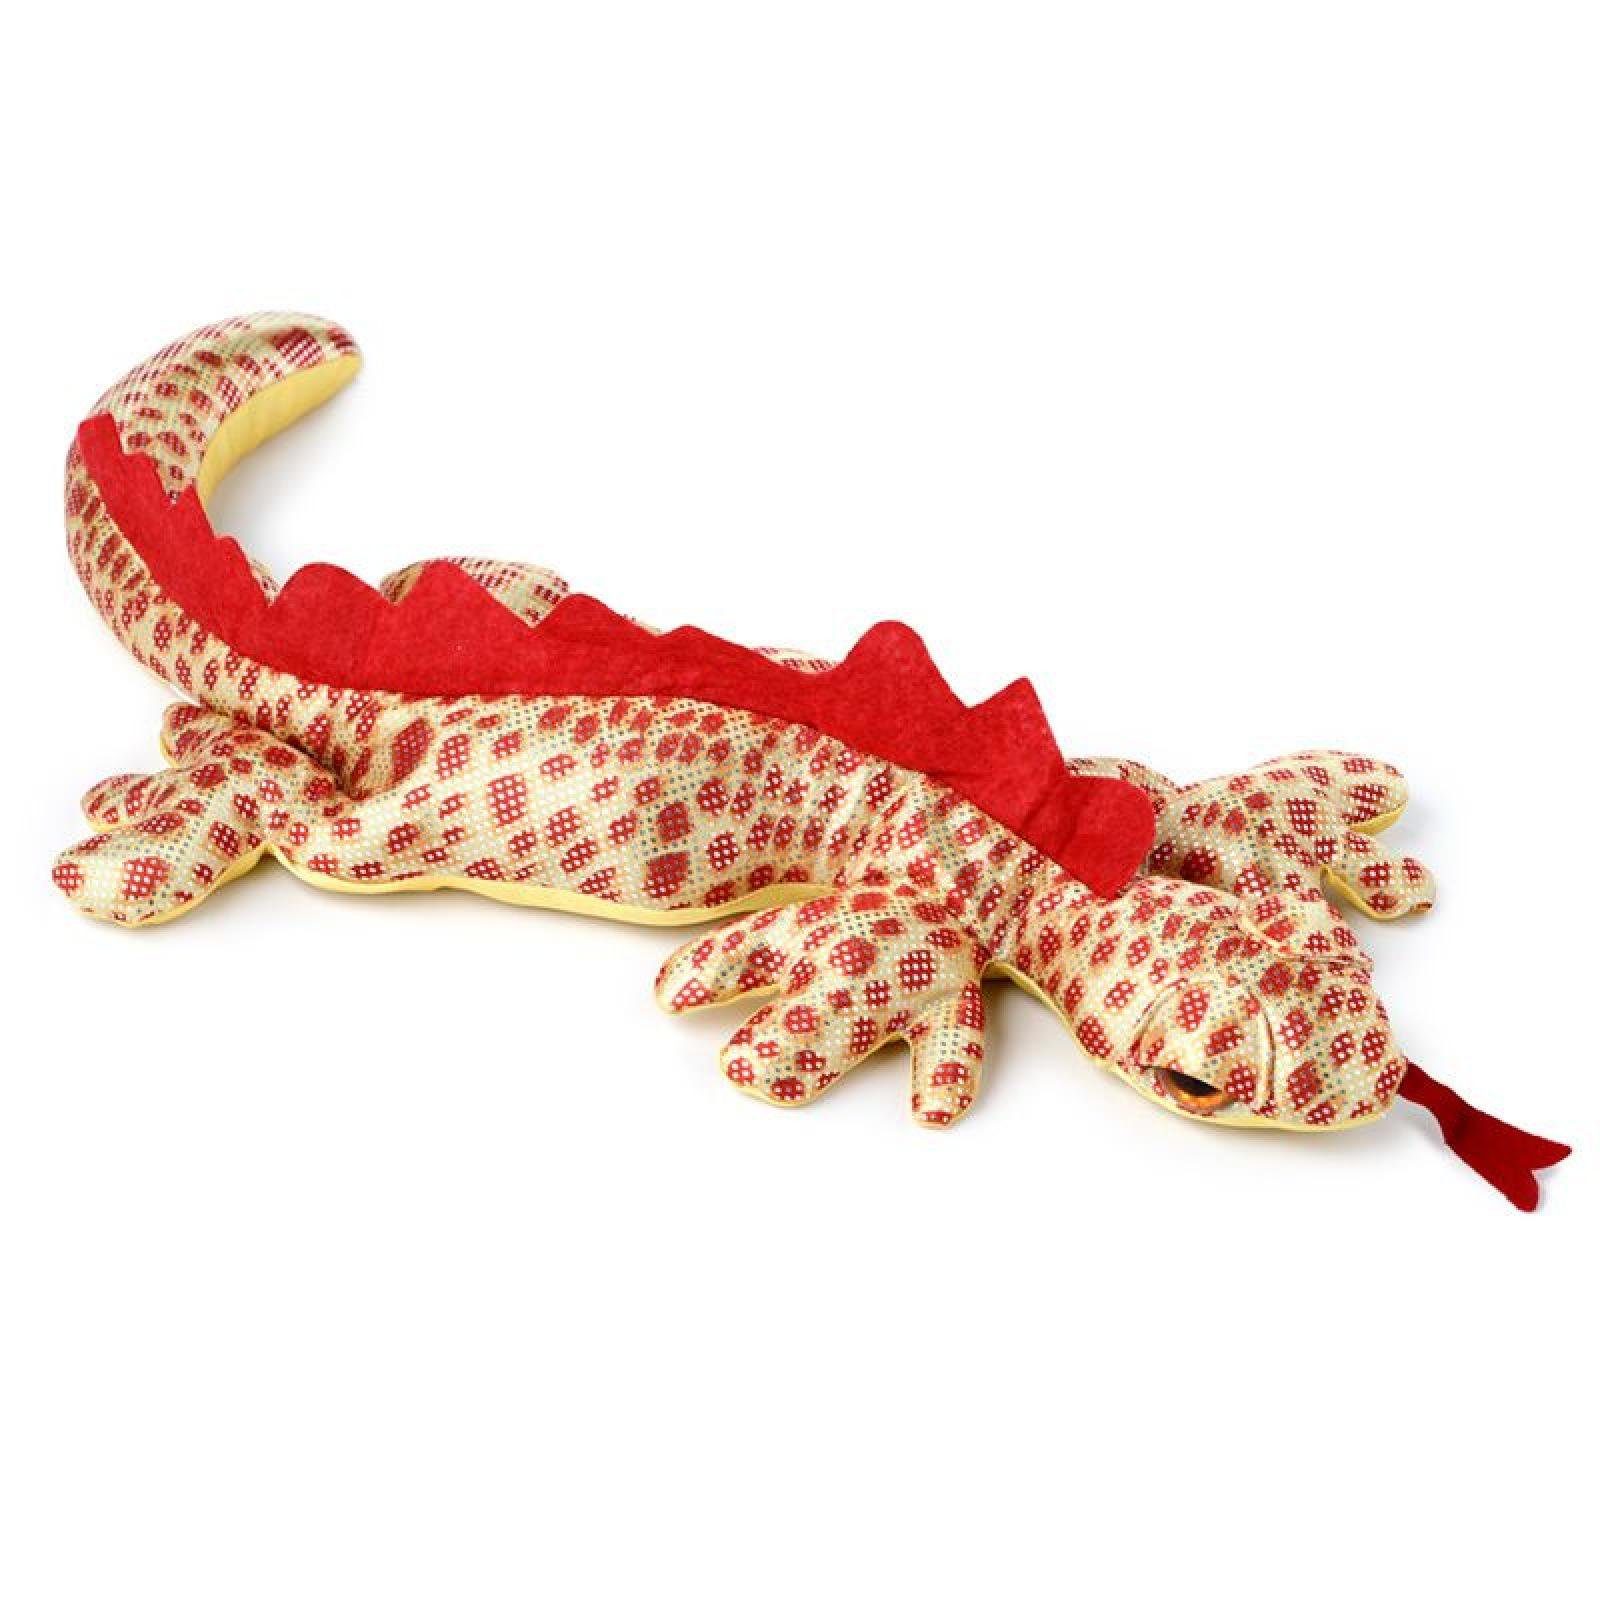 Puckator Tierfigur Sandgefüllter Salamander, Groß